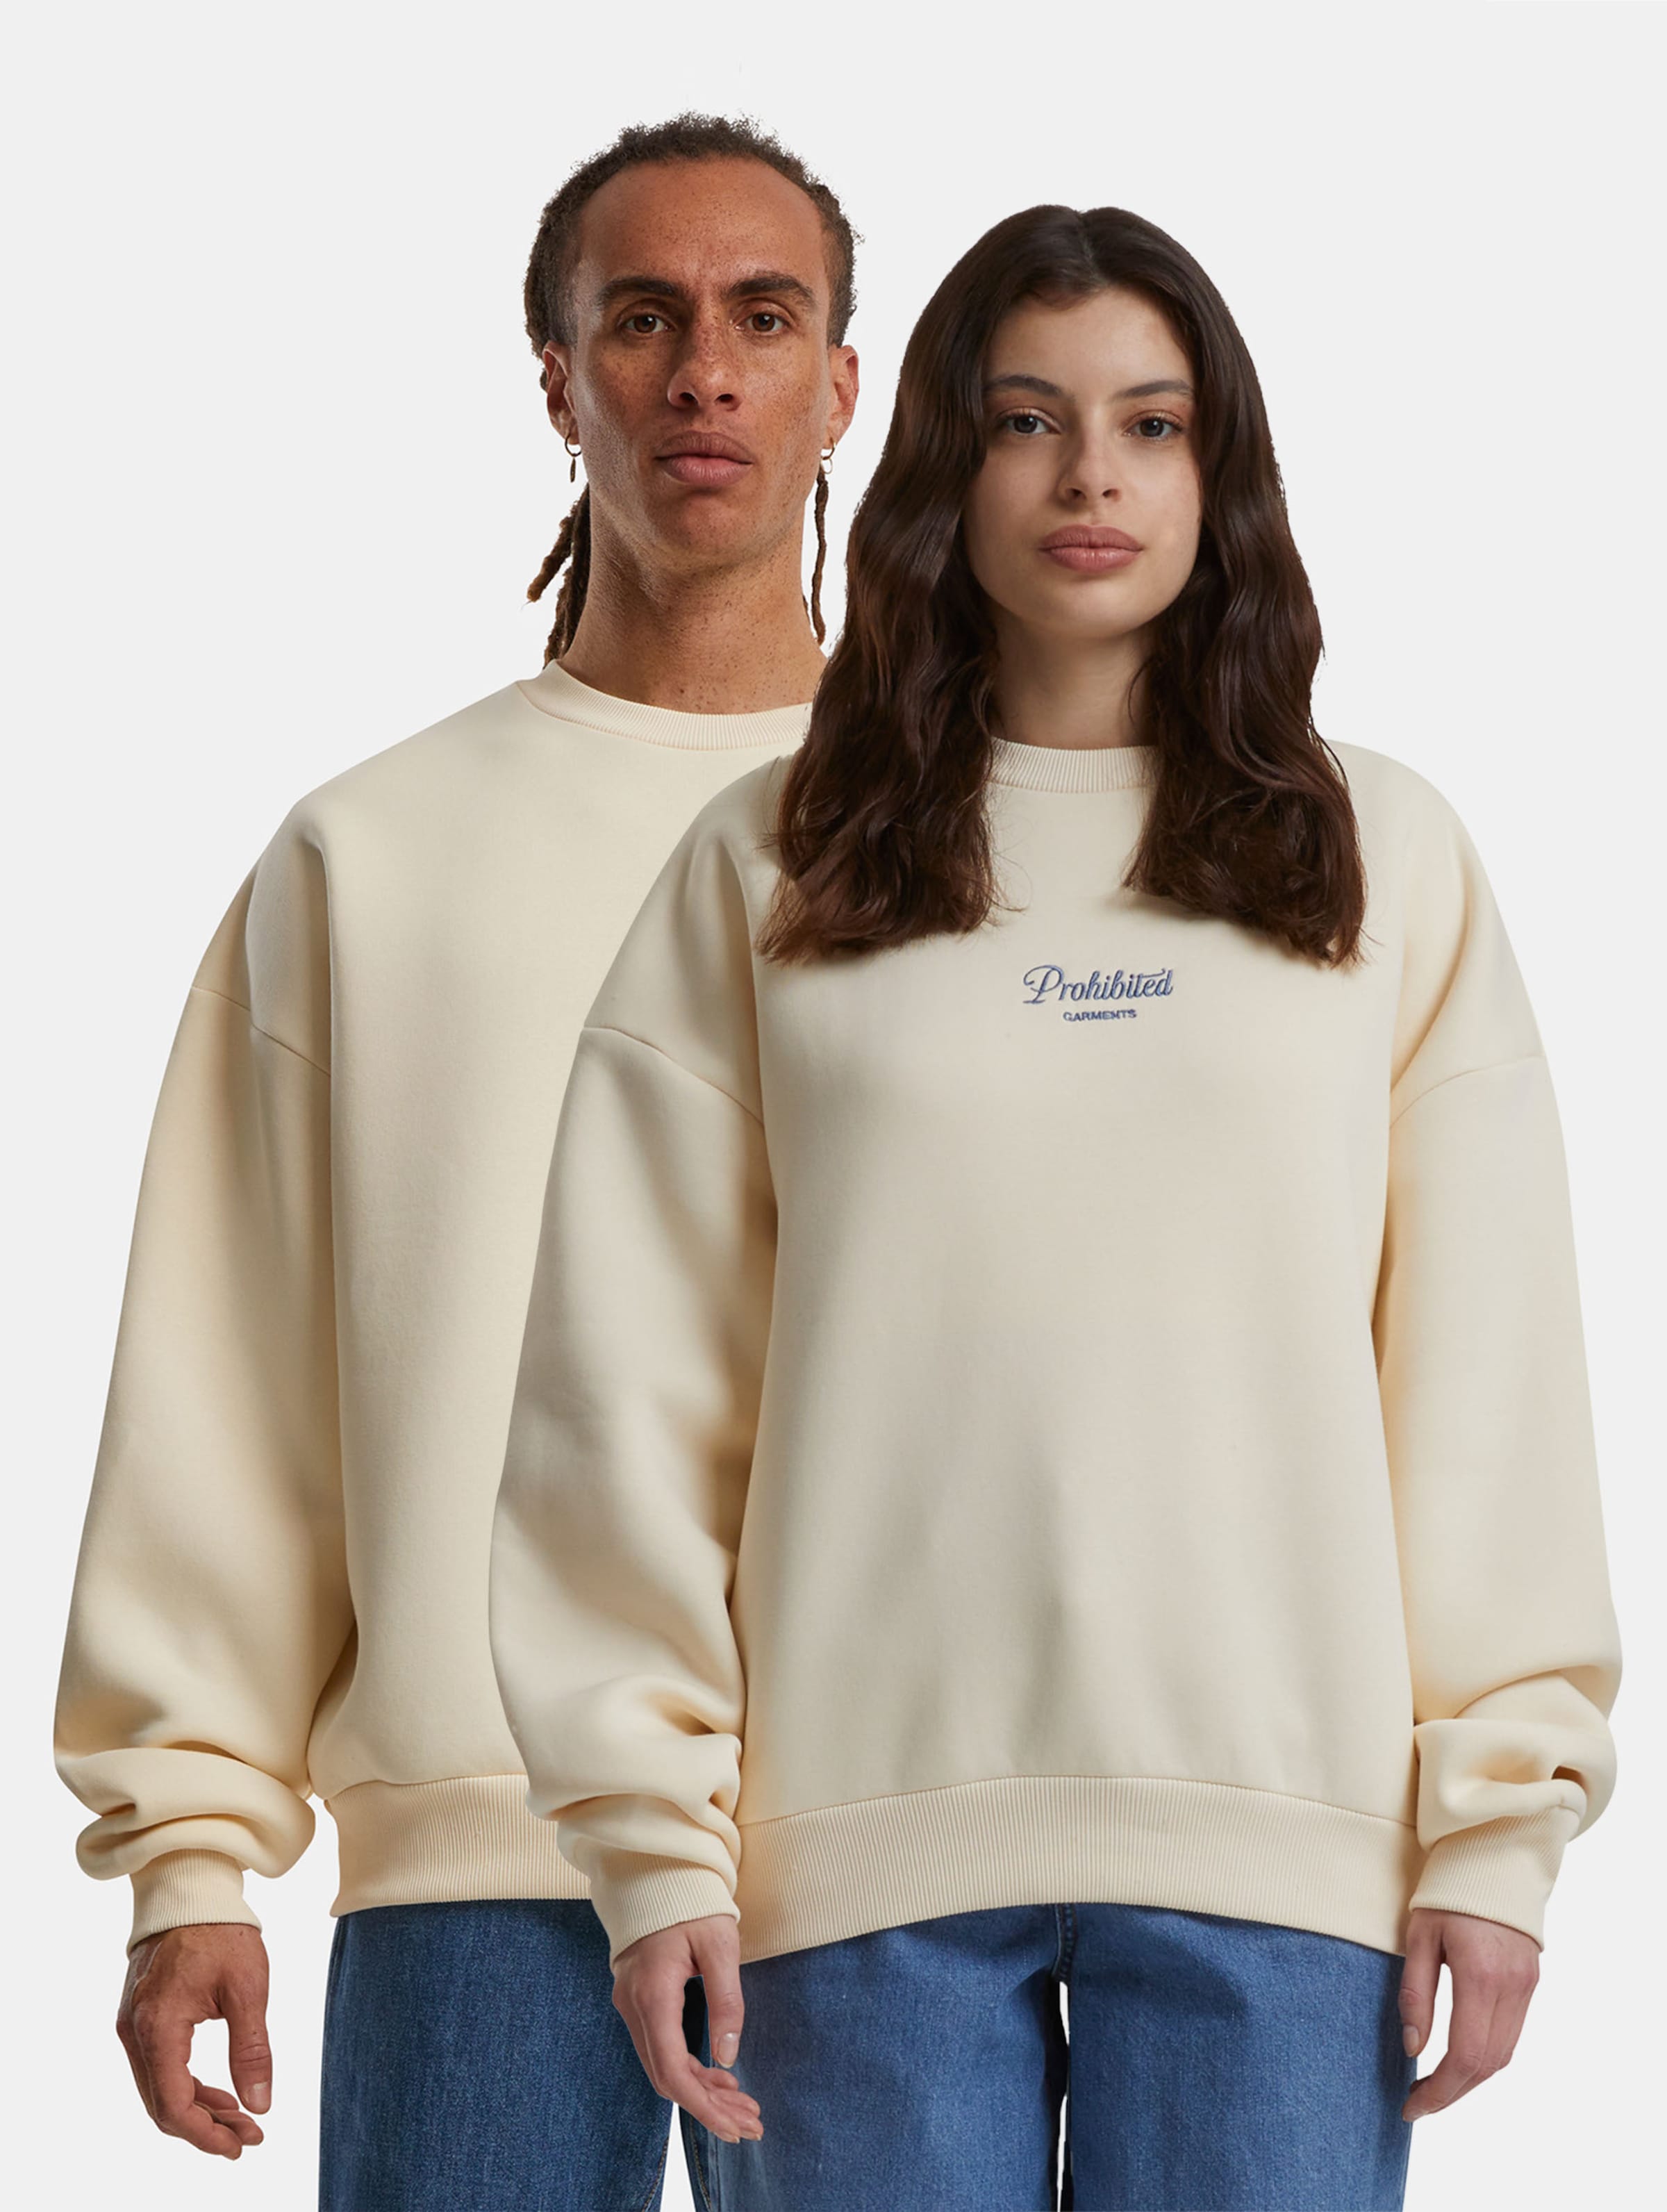 Prohibited PB Garment Crew Neck Pullover Frauen,Männer,Unisex op kleur beige, Maat XL